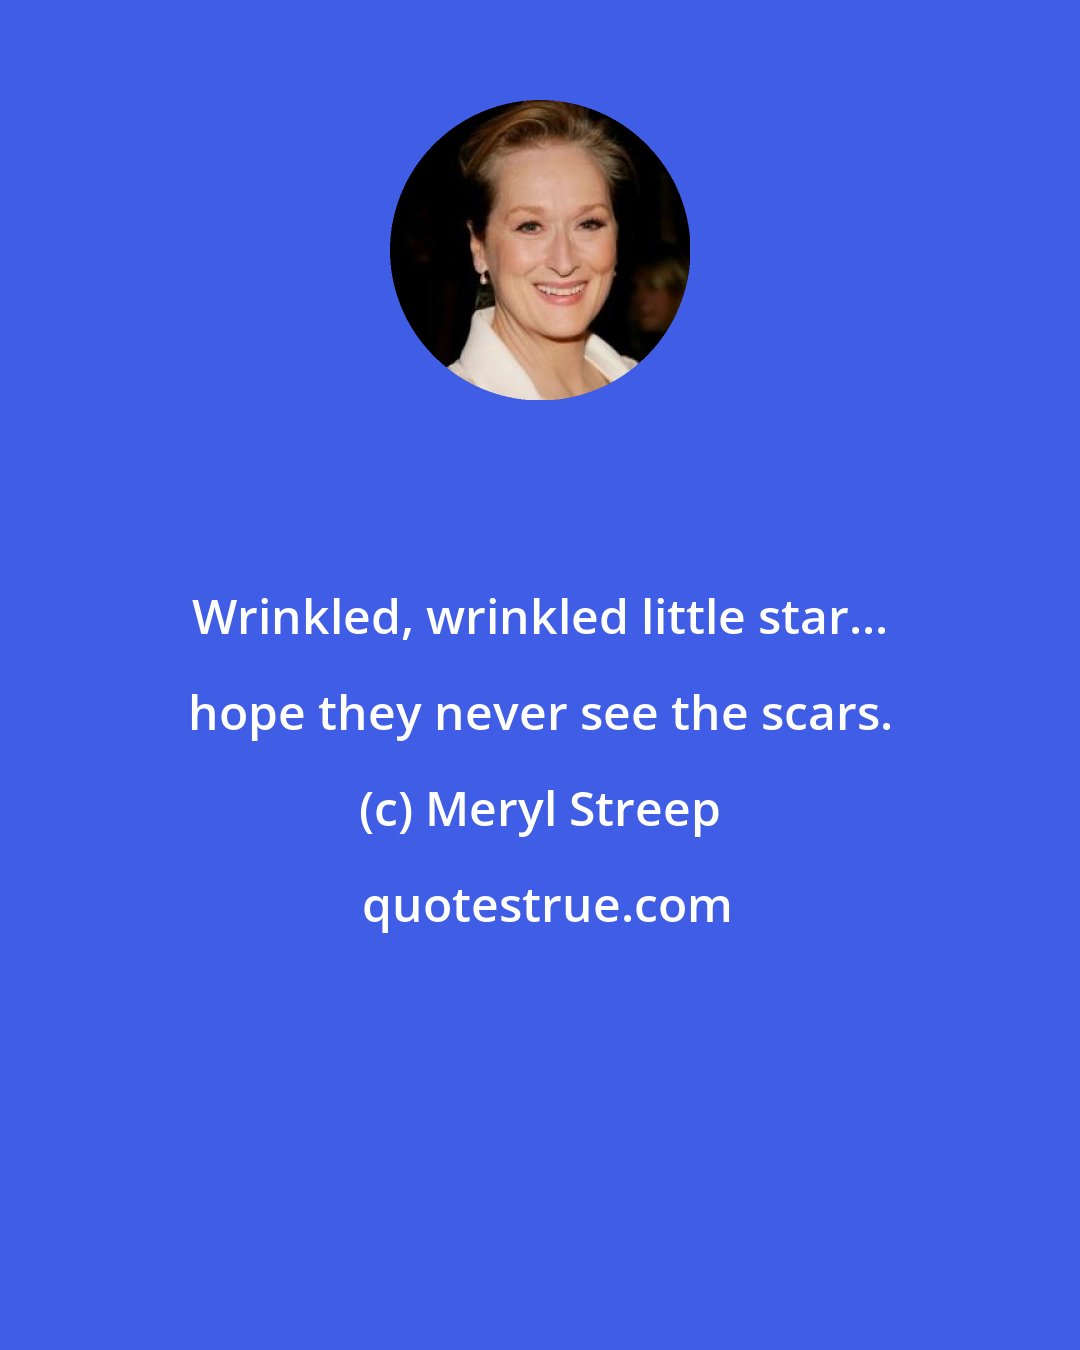 Meryl Streep: Wrinkled, wrinkled little star... hope they never see the scars.